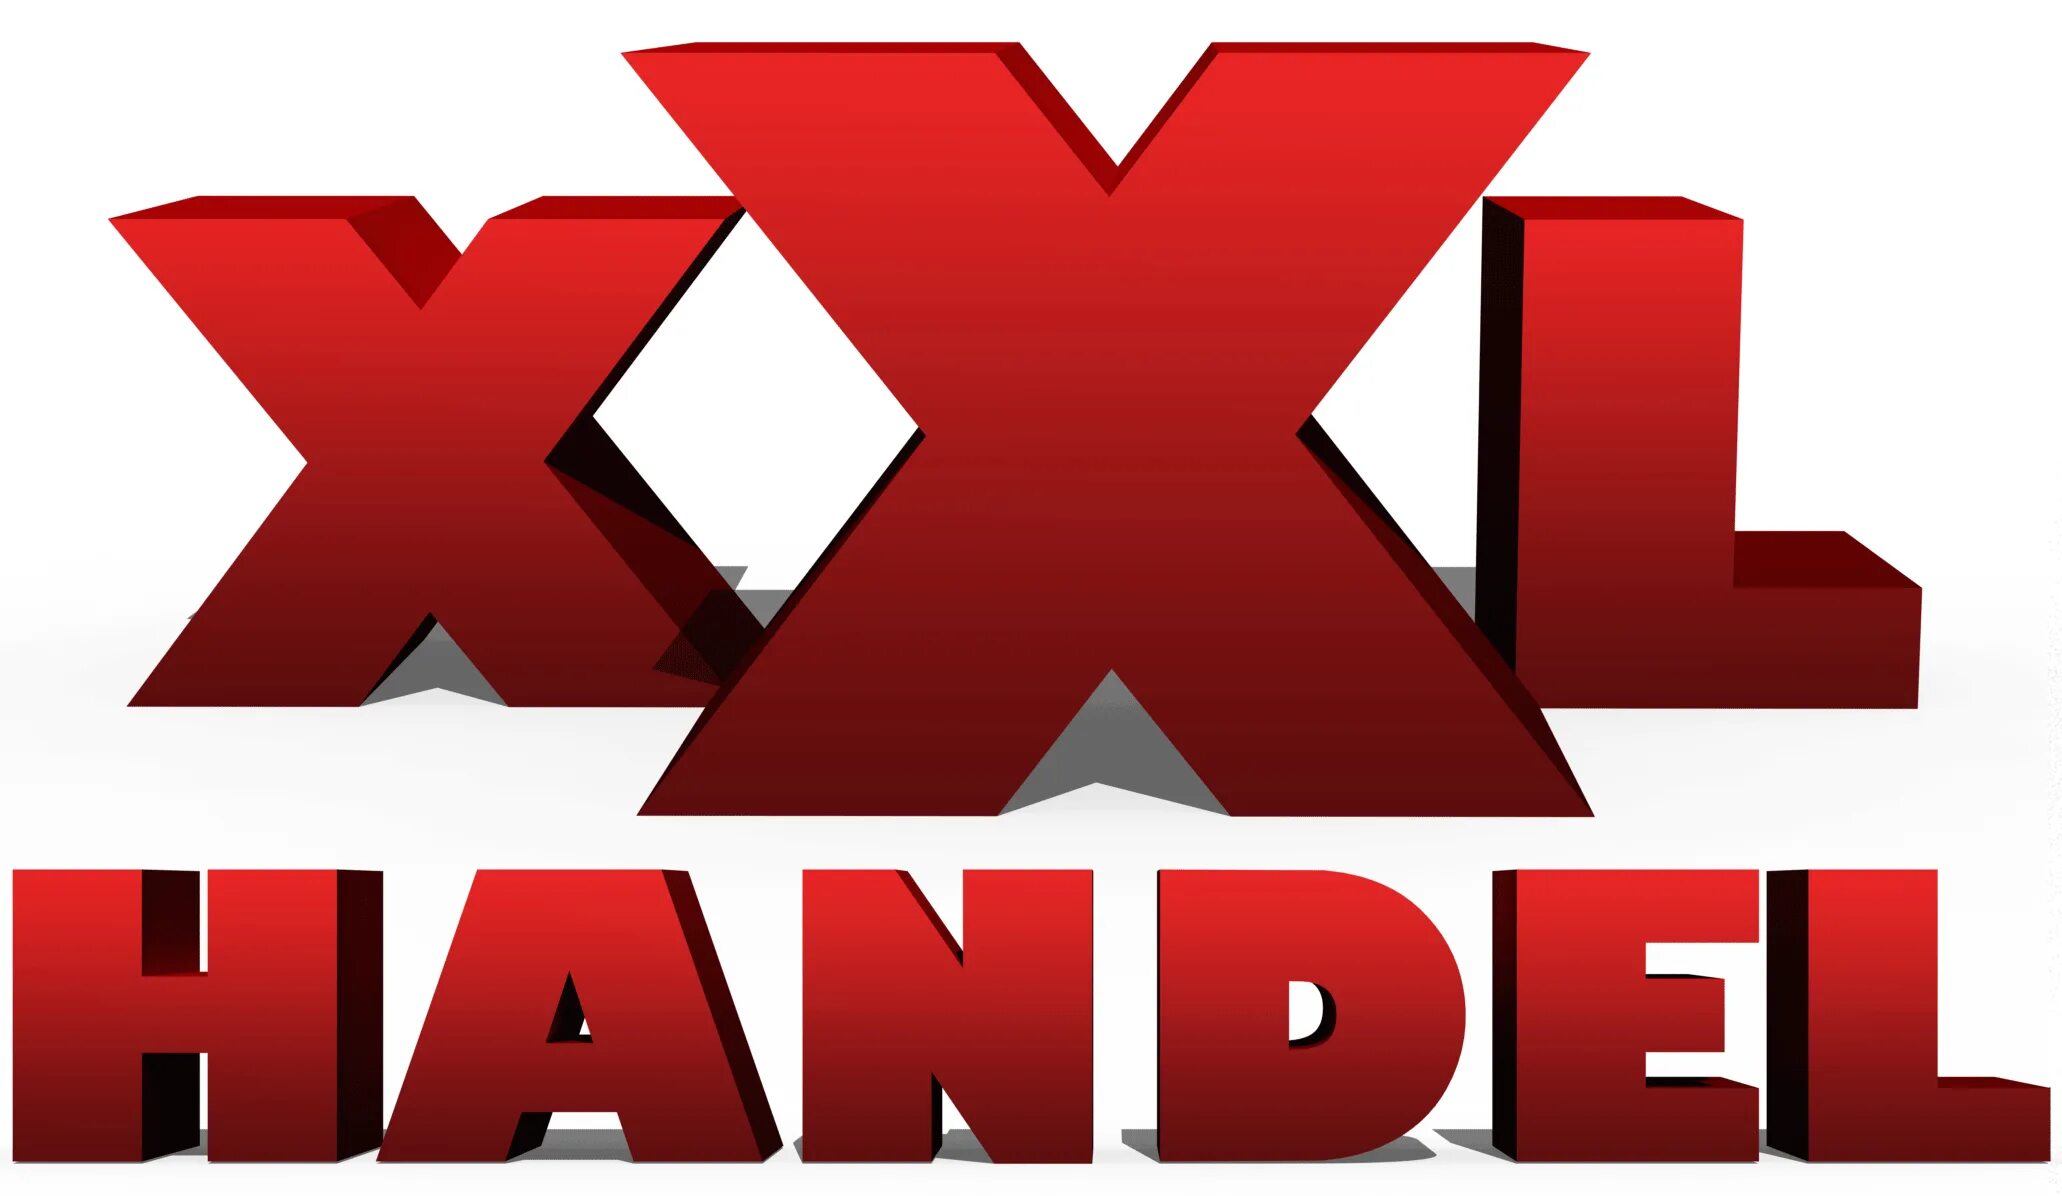 XXL надпись. Логотип ххл. Телеканал XXL. XXL картинки.